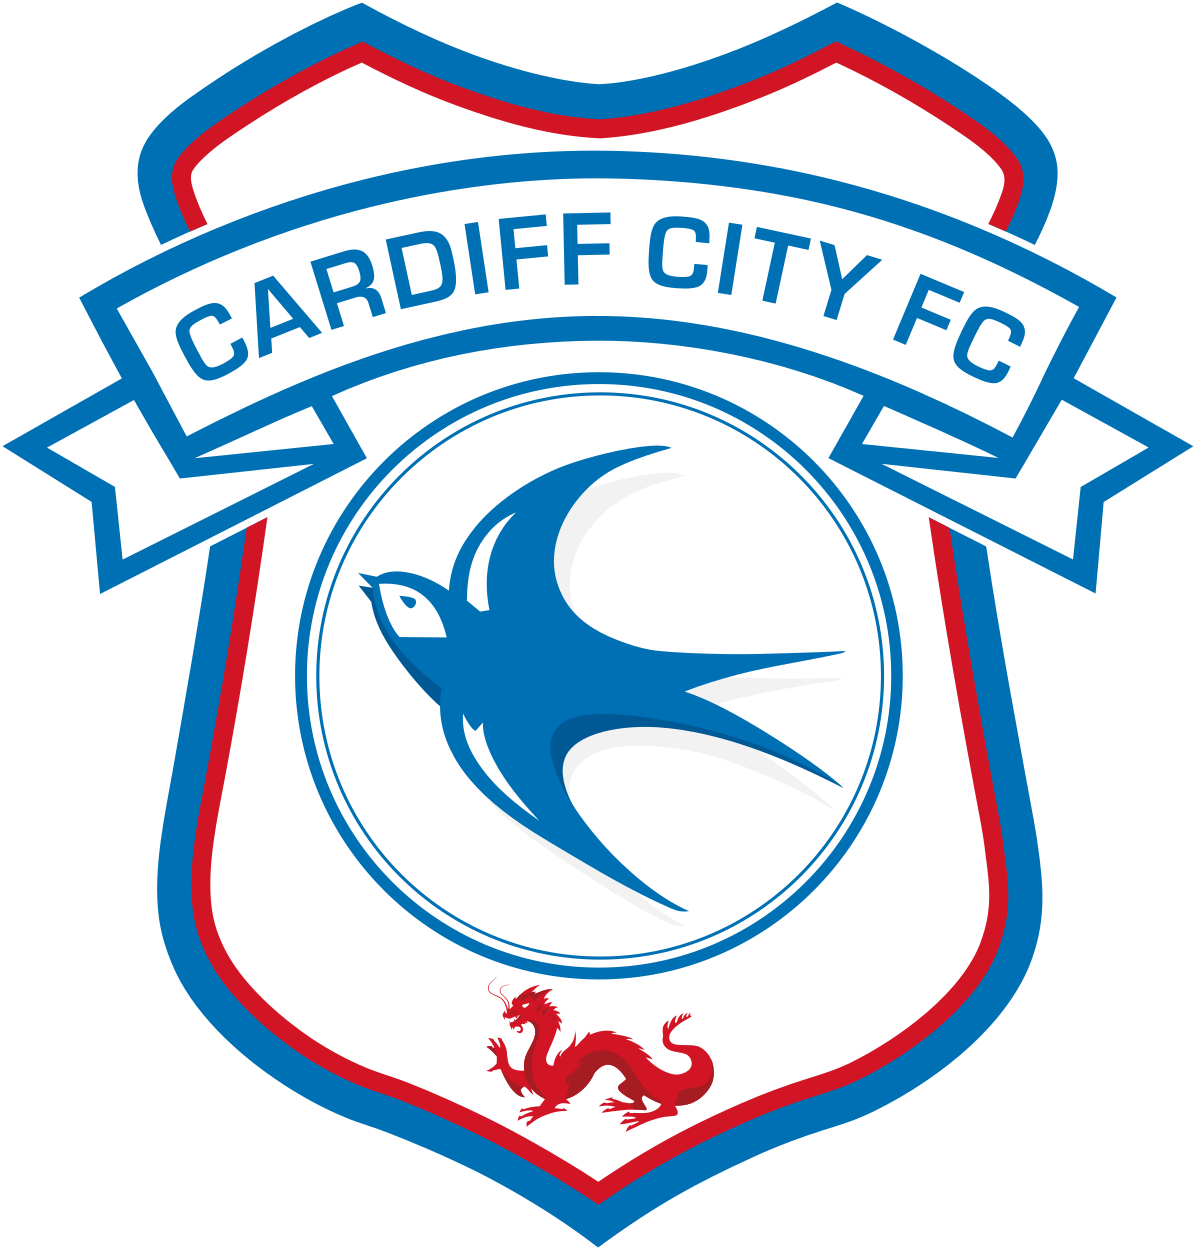 Cardiff City F C logo PNG Immagine di immagine